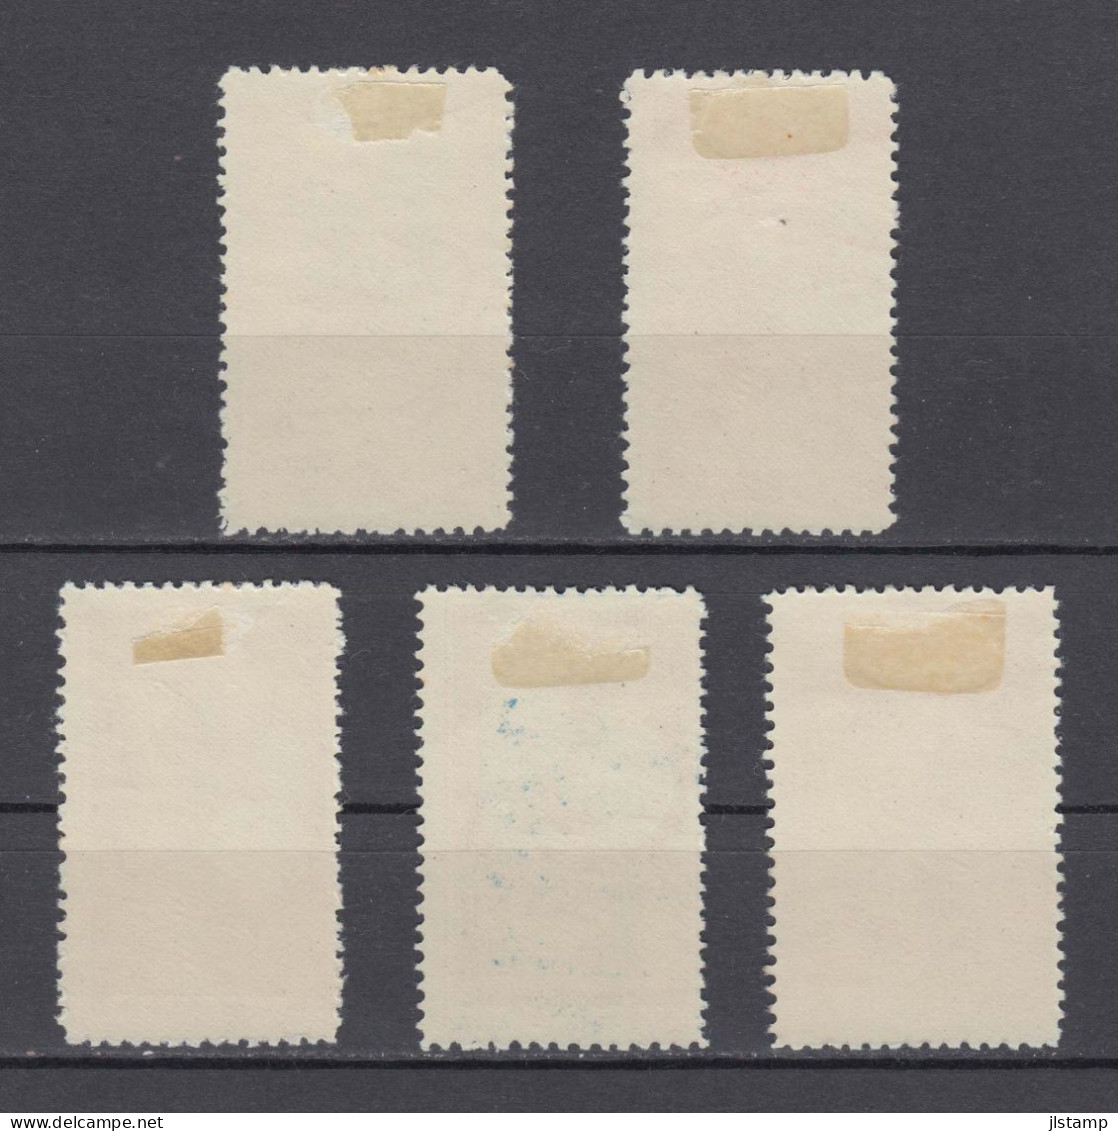 Turkey 1950 Izmir International Fair Stamp Set,Scott# 1008/1012,OG MH,VF - Ungebraucht